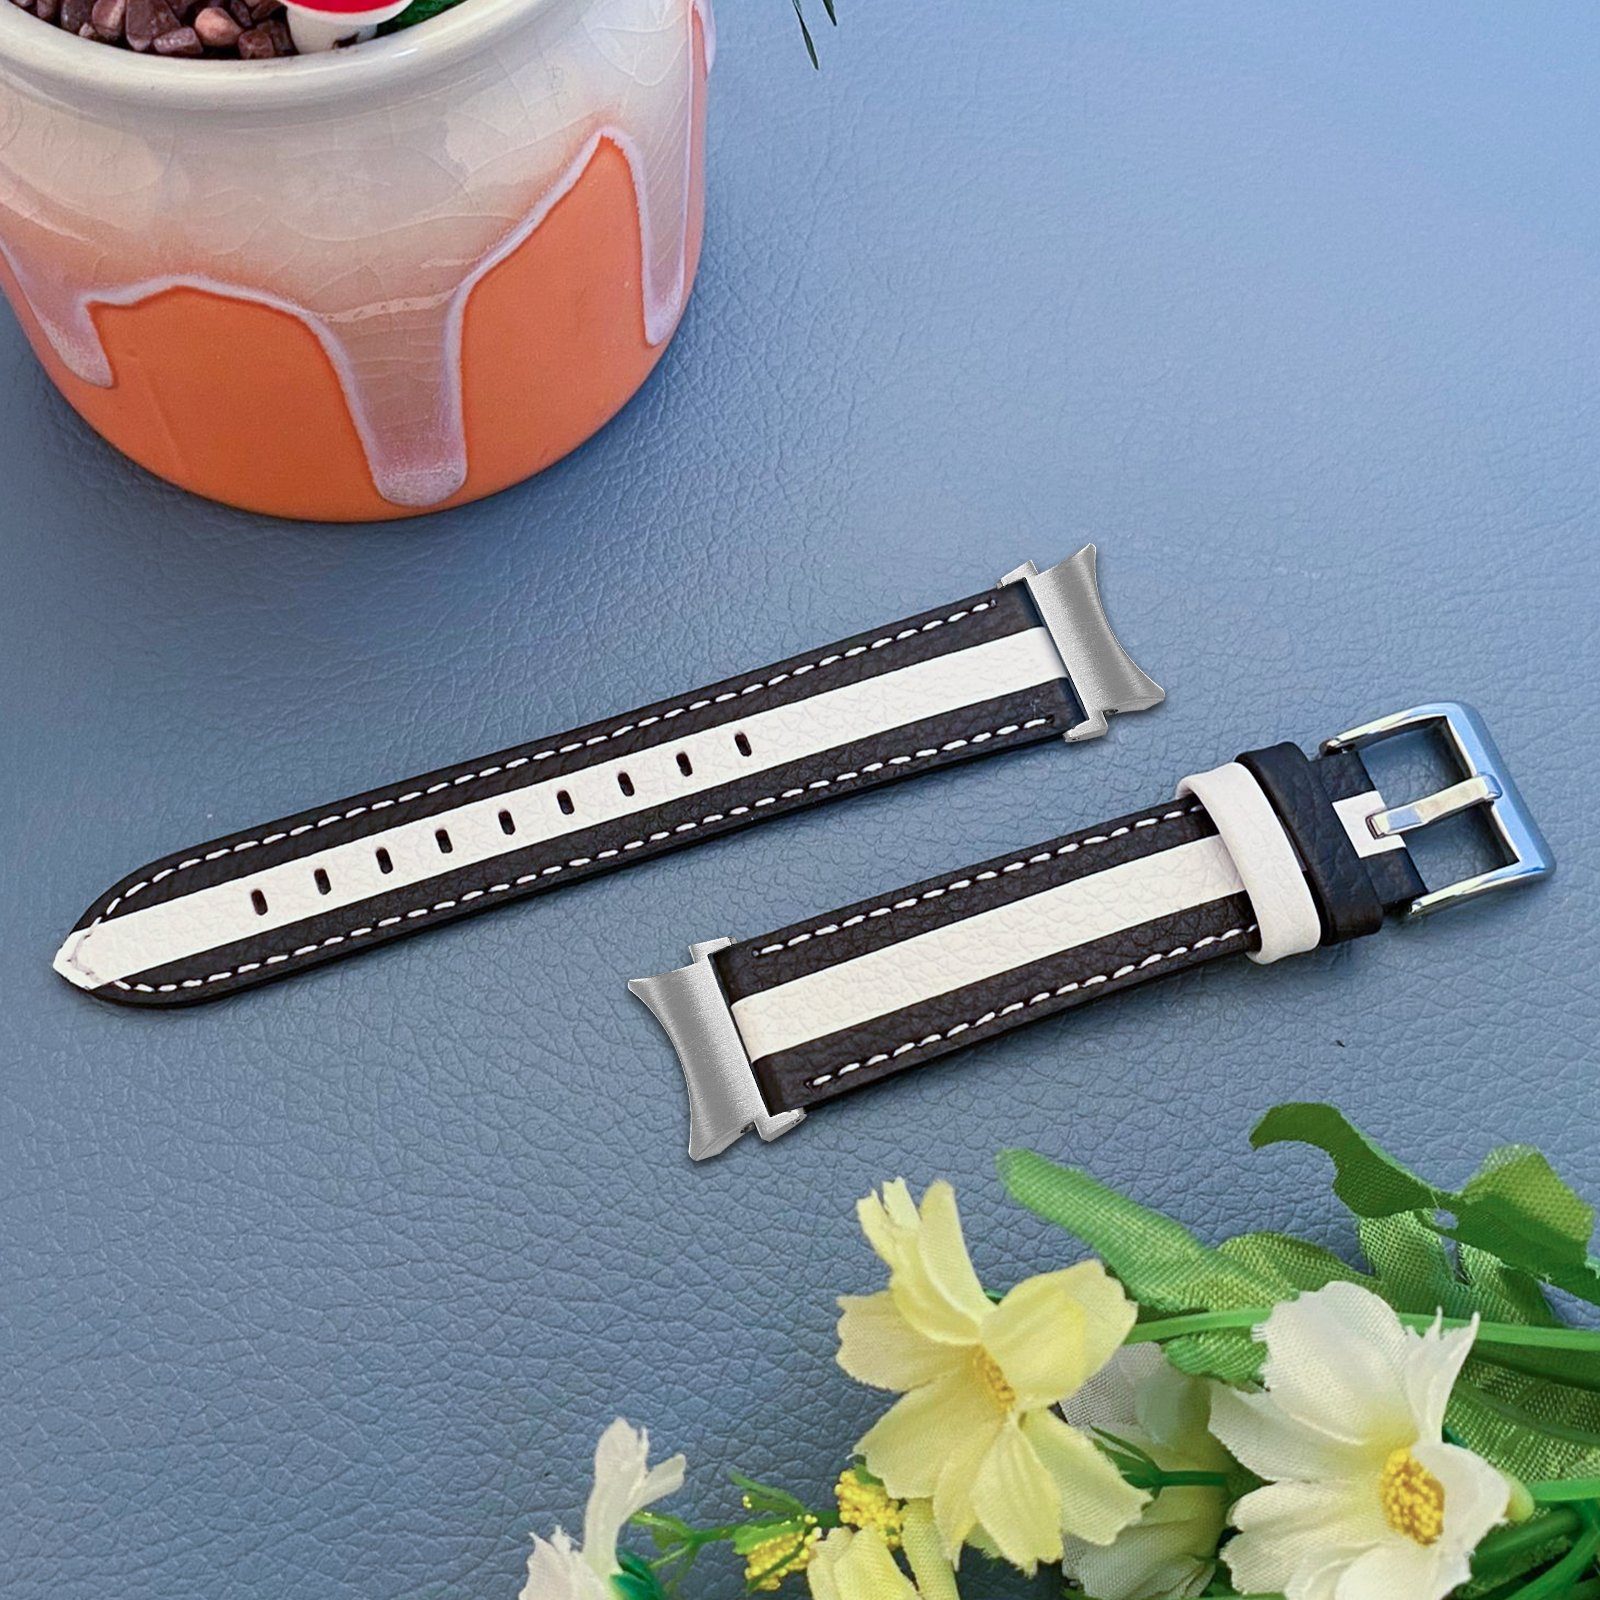 Weiß Schwarz Galaxy 4 Samsung Smartwatch-Armband Armband Watch 20mm ELEKIN Armband und 20mm für Kompatible Classic